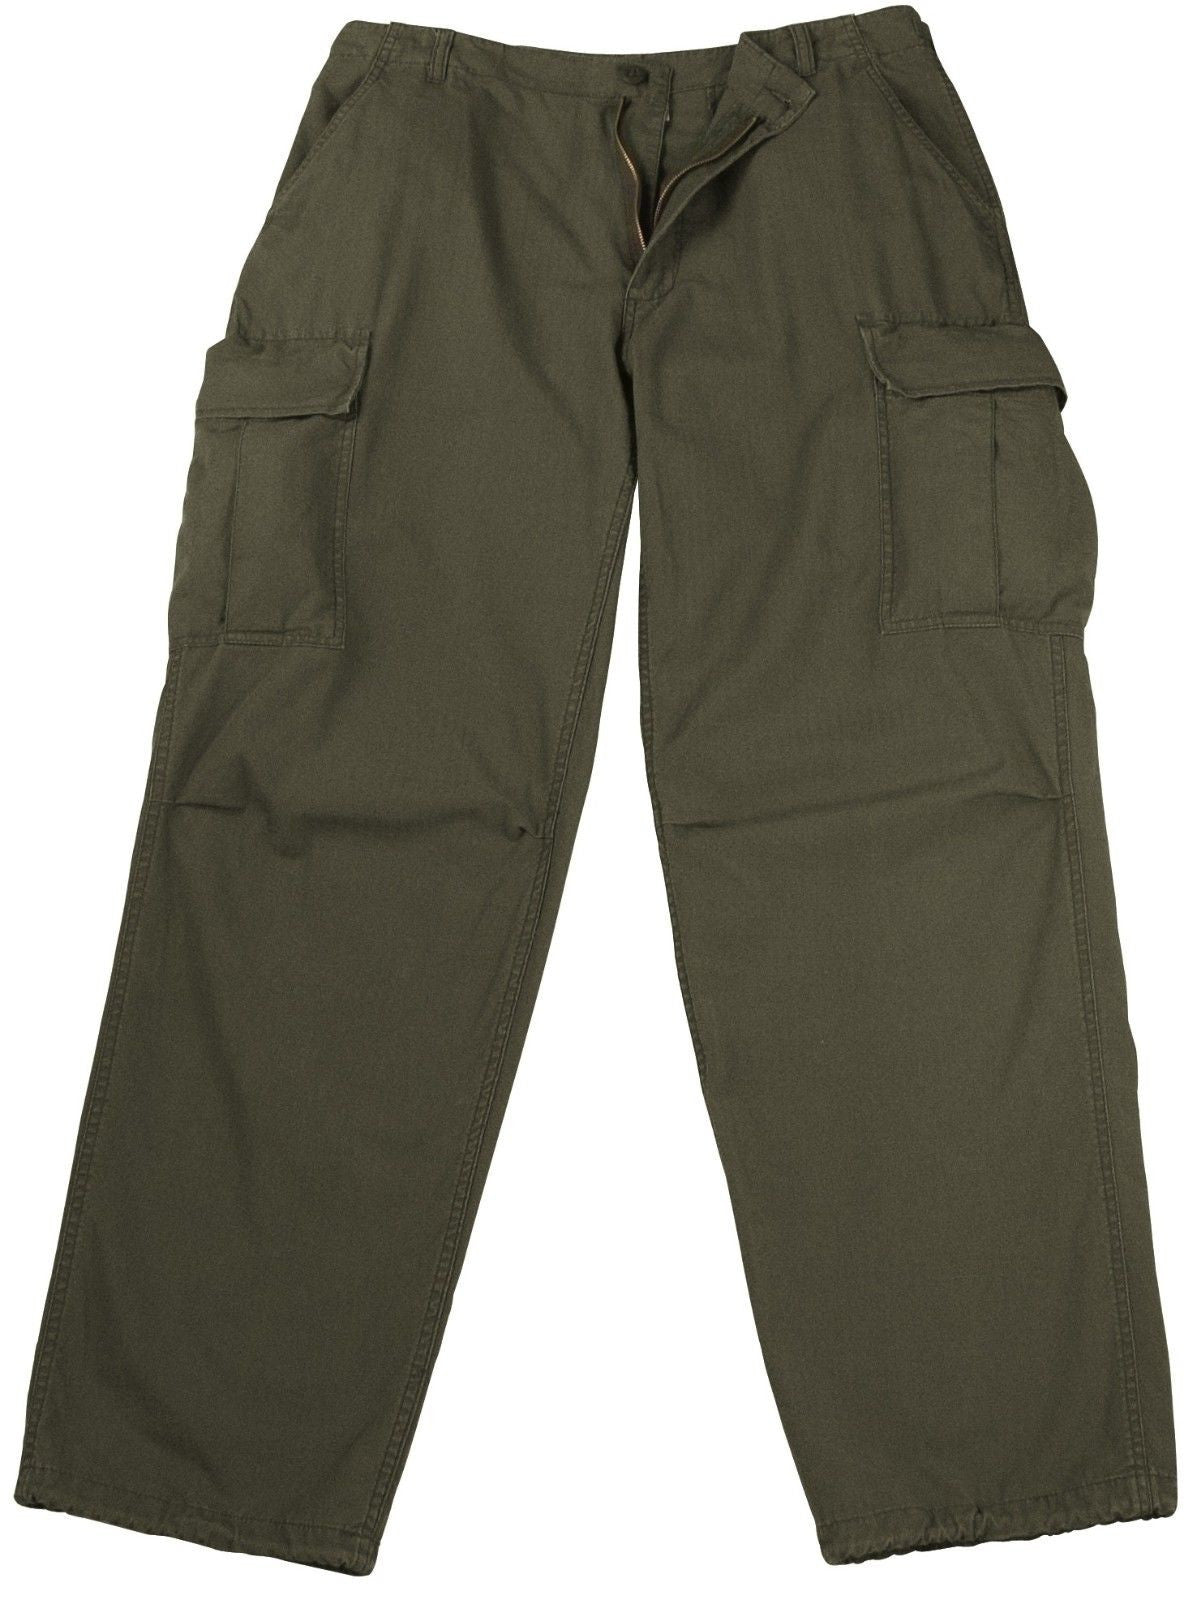 Vintage Vietnam Fatigue Cargo Pants Rip-Stop - Olive Drab 100% Cotton Rip-Stop